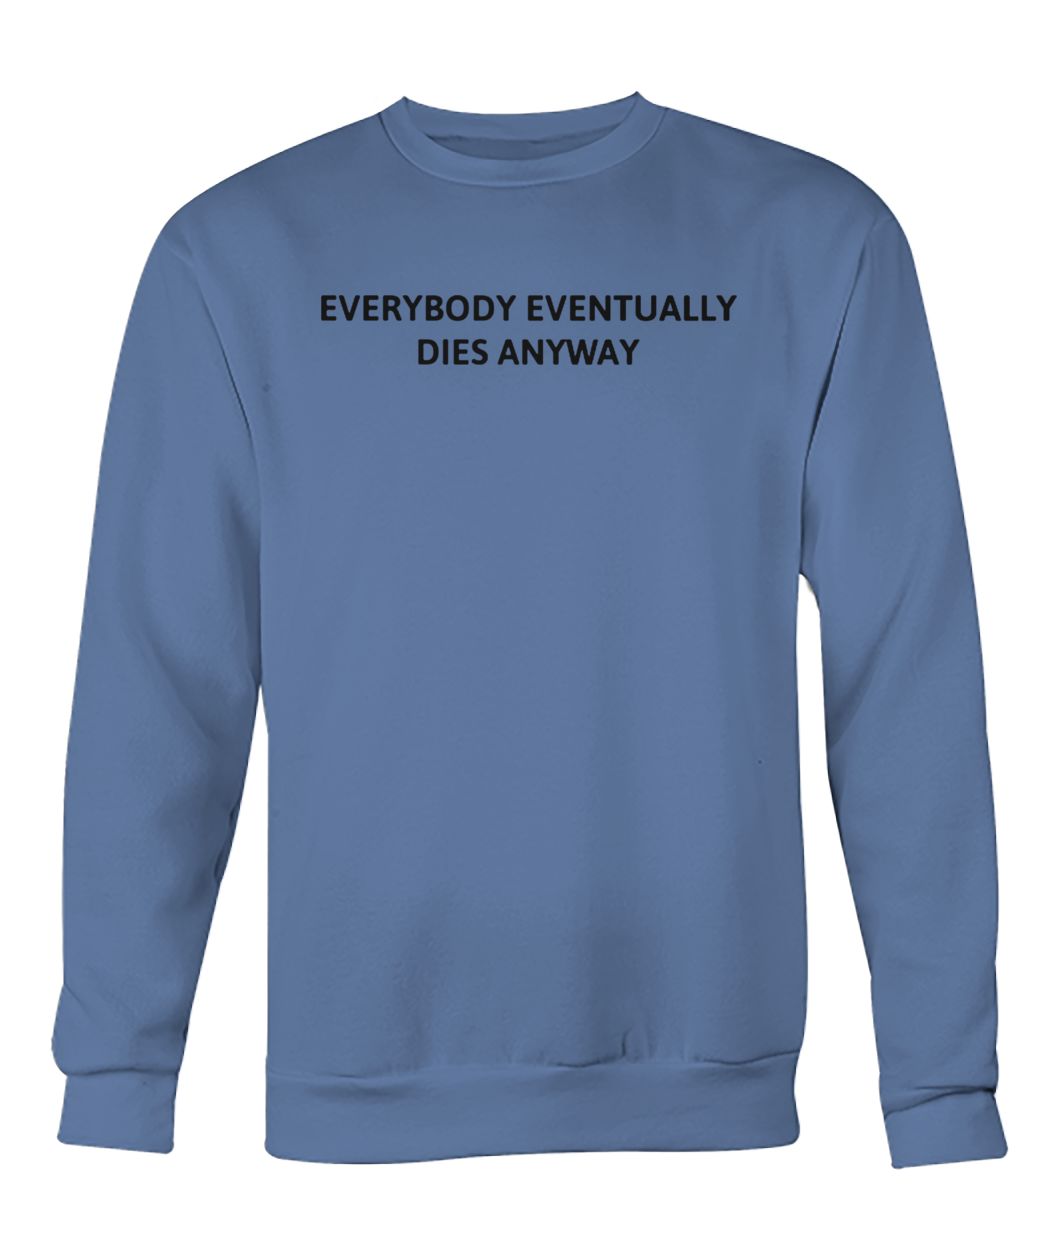 Everybody eventually dies anyway crew neck sweatshirt